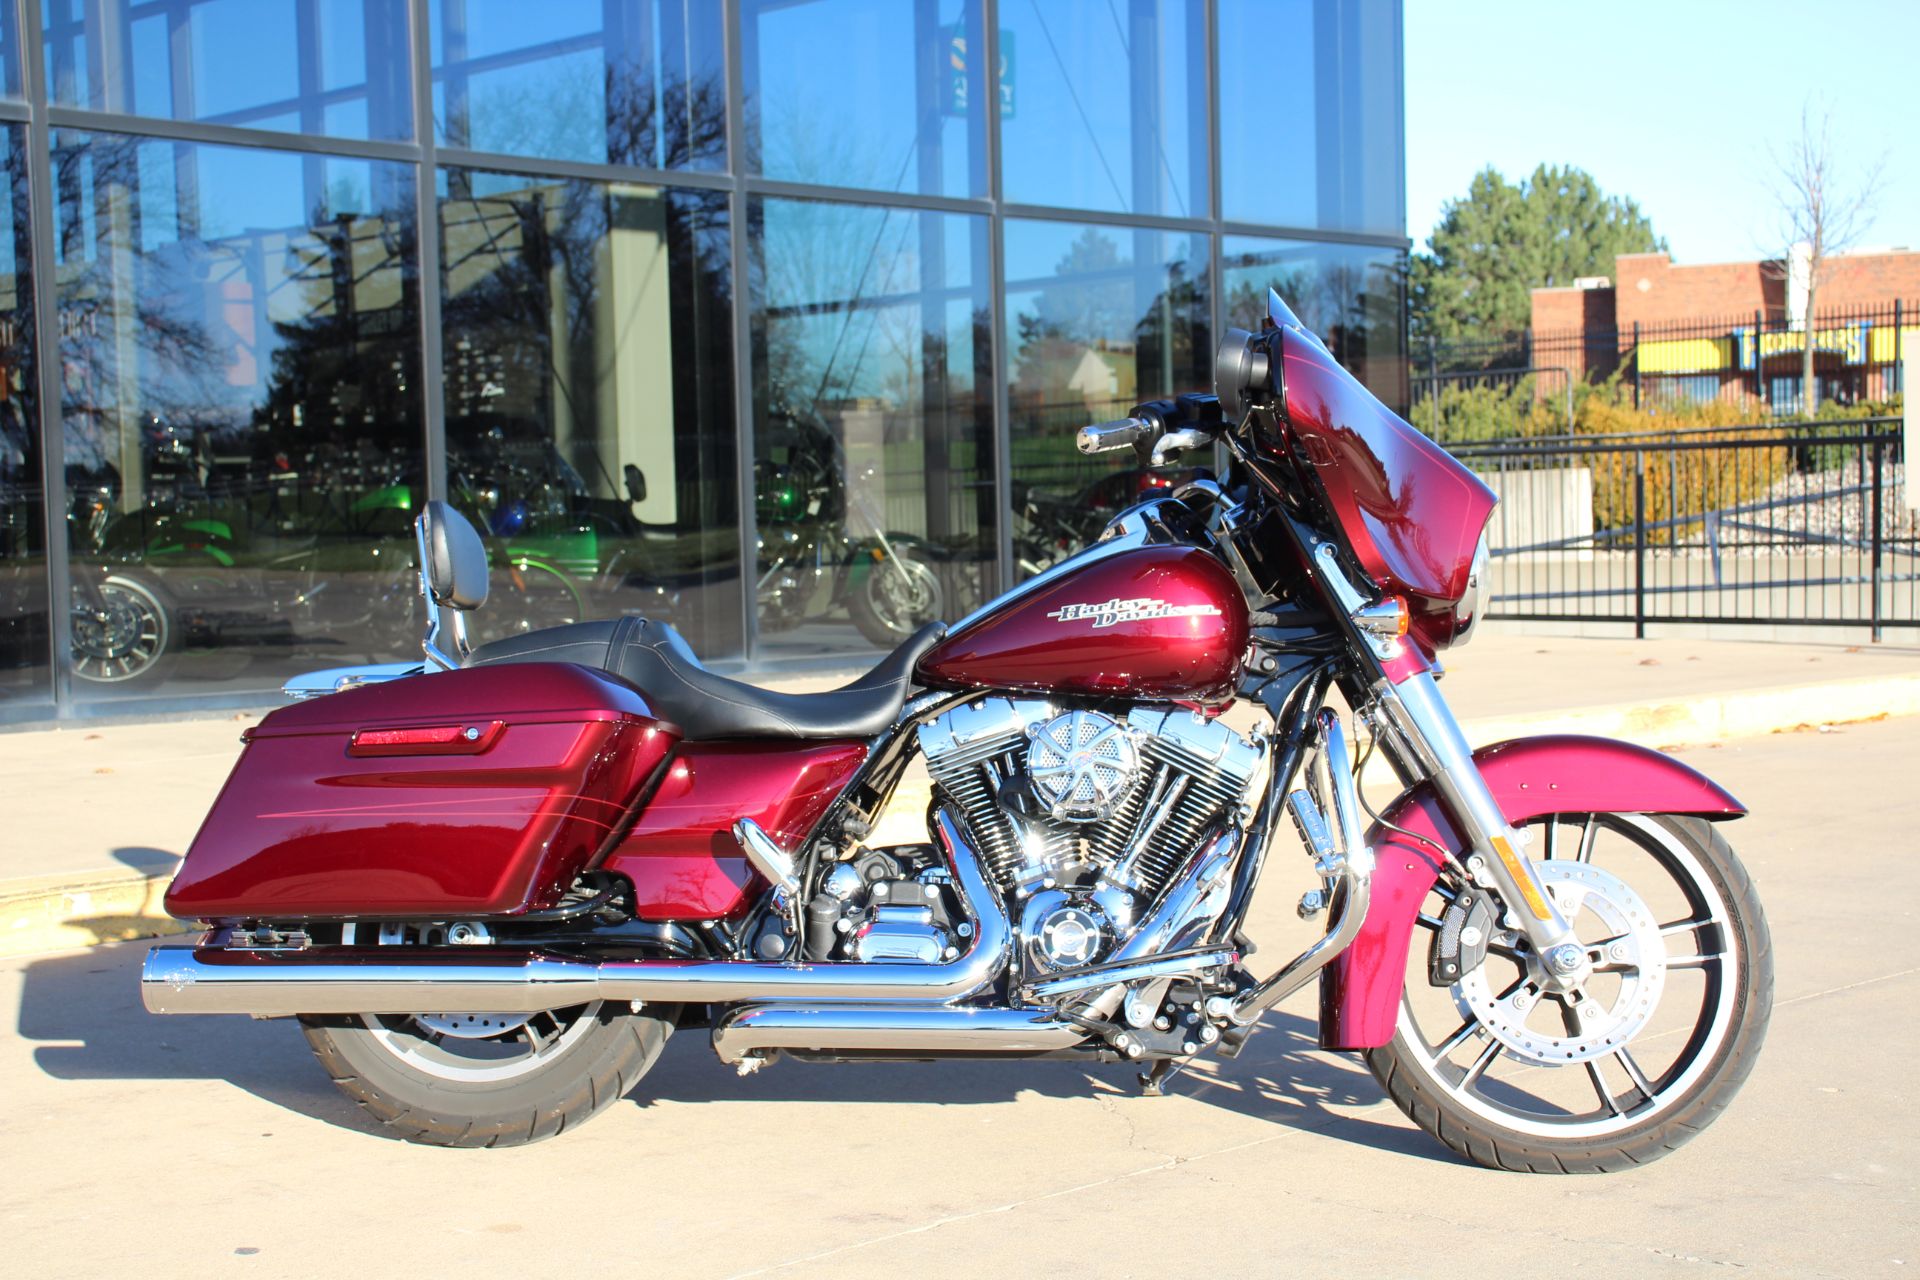 2014 Harley-Davidson Street Glide® Special in Flint, Michigan - Photo 1